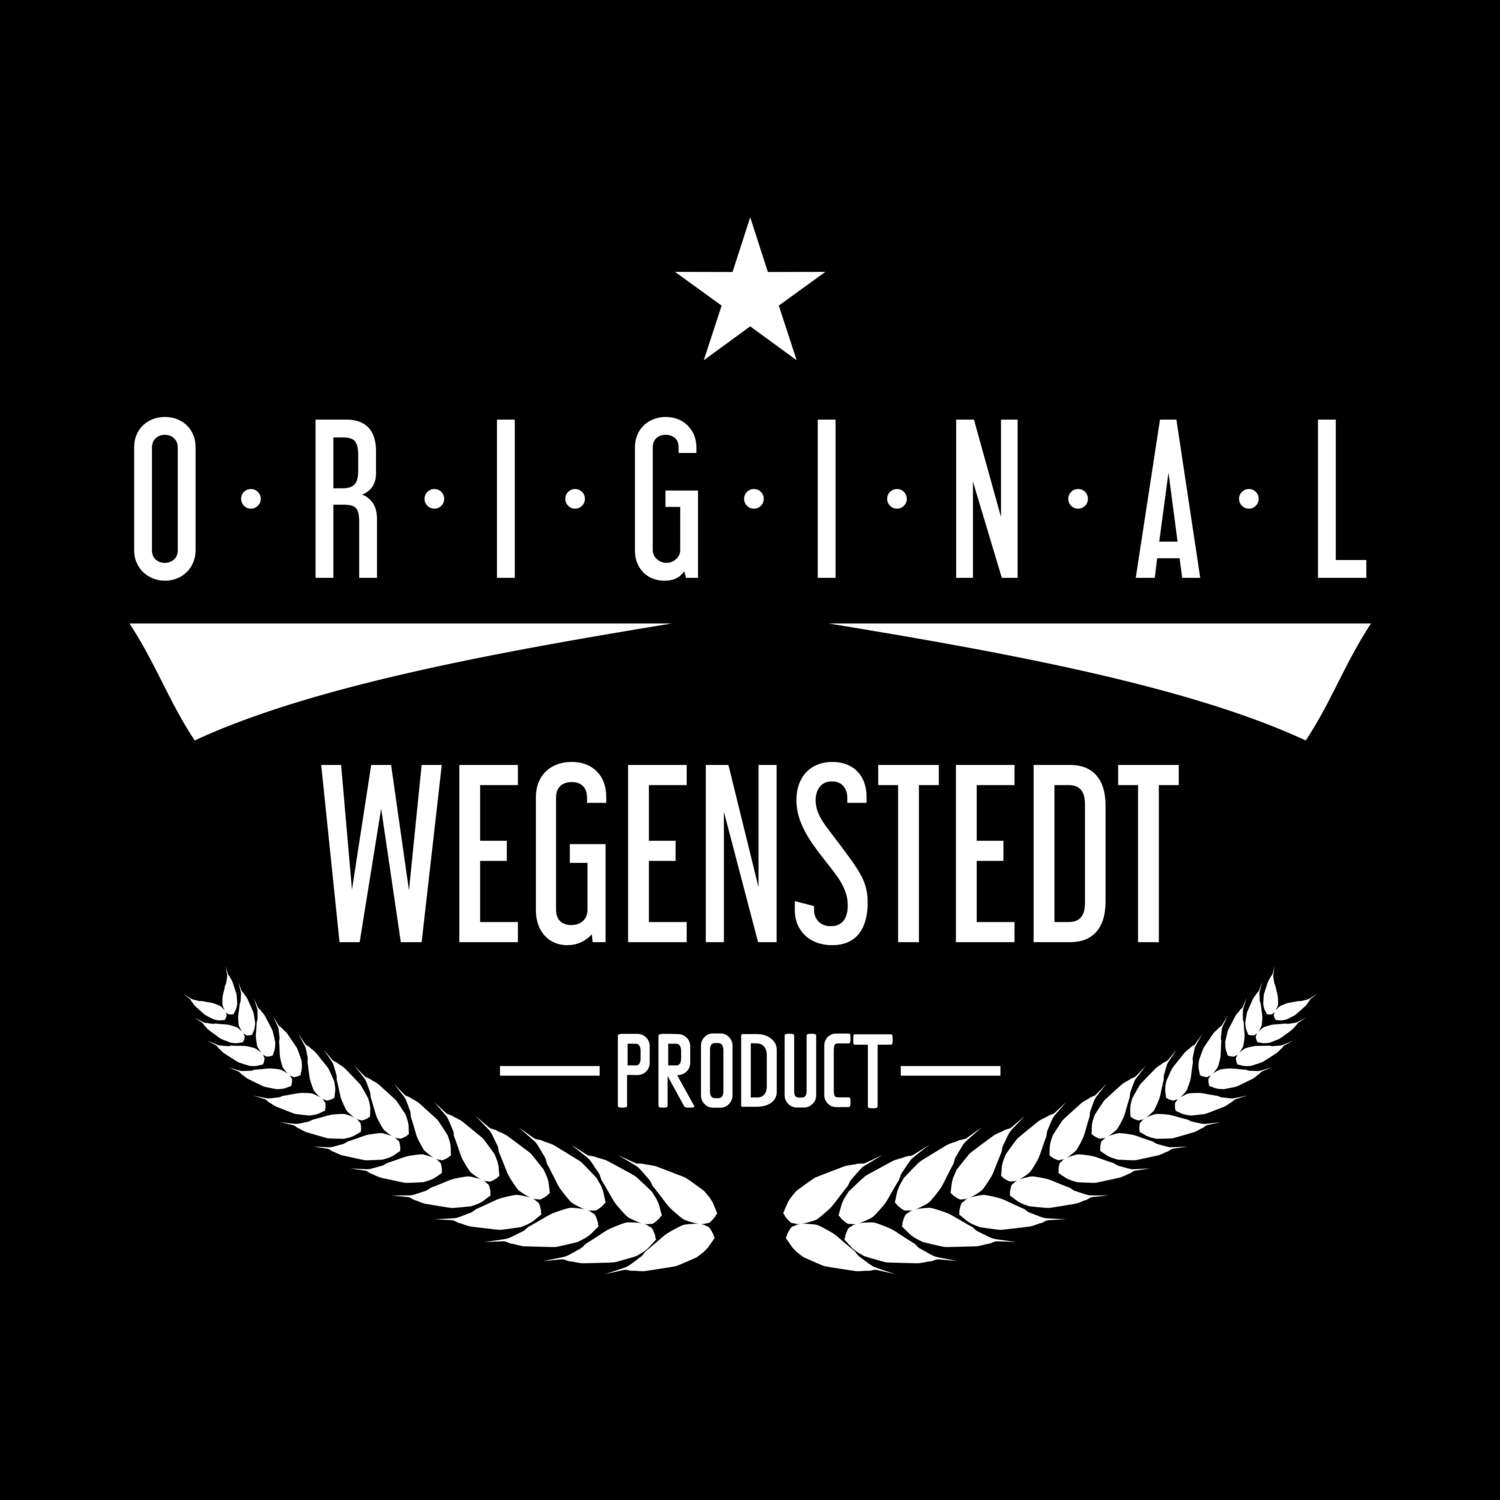 Wegenstedt T-Shirt »Original Product«